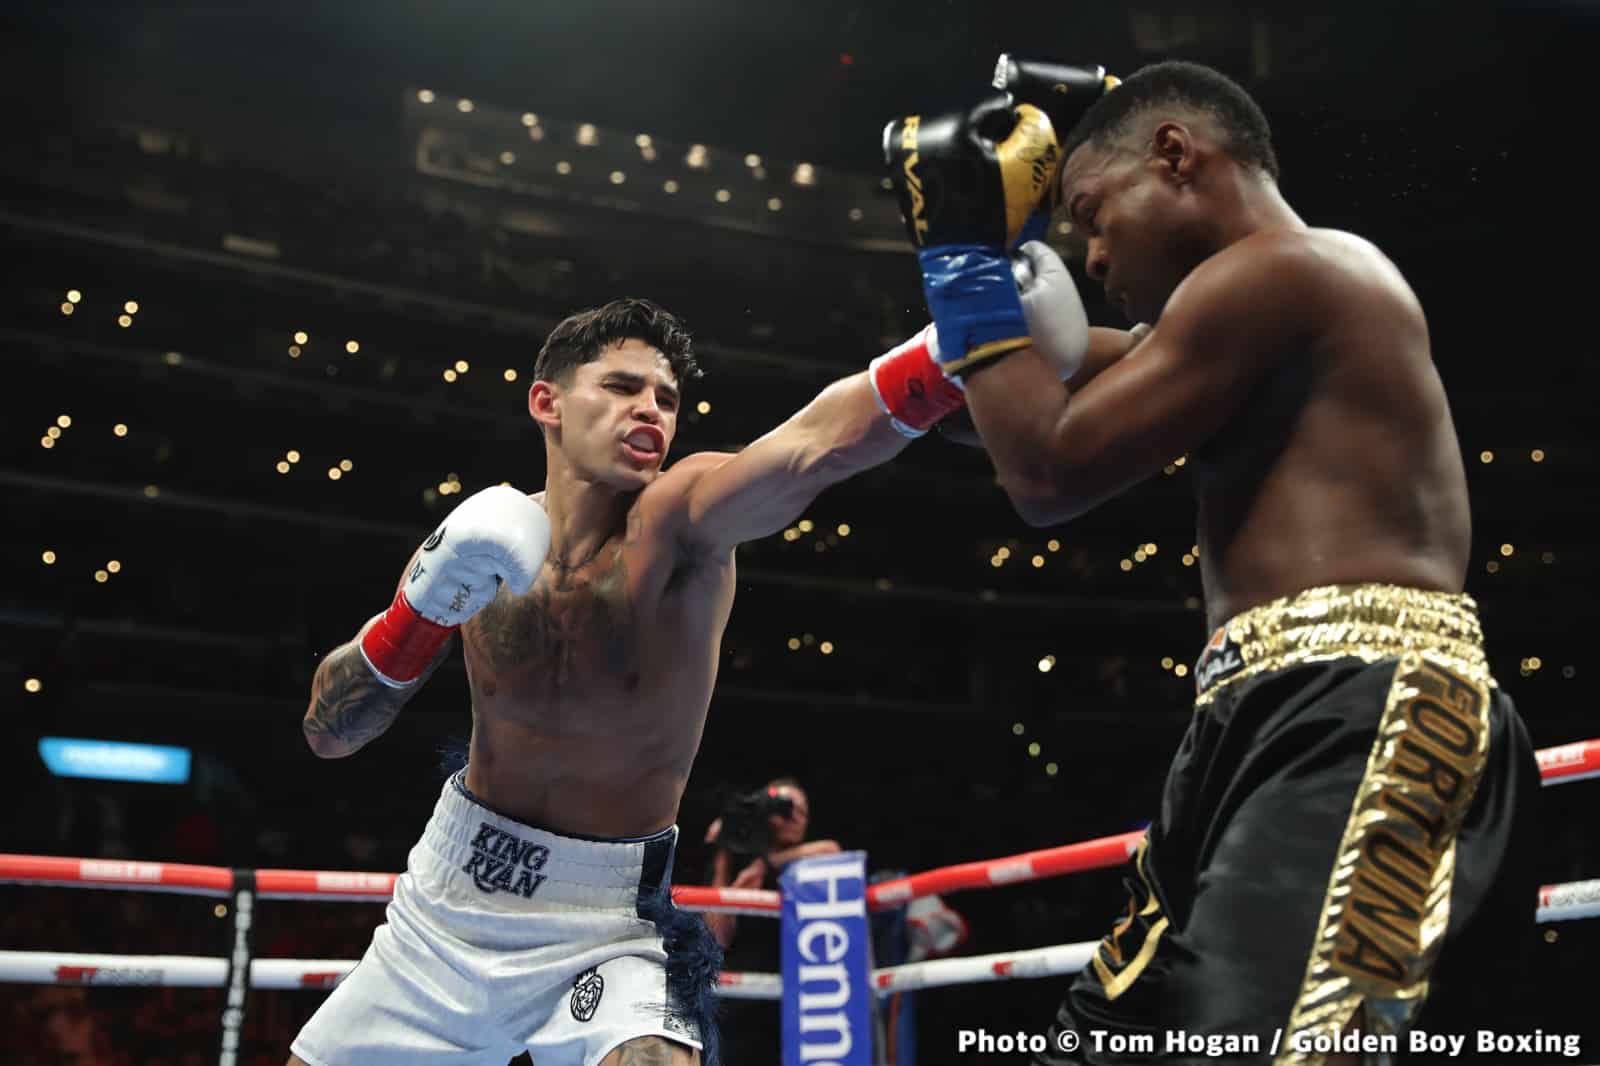 Garcia destroys Fortuna in 6th round KO - Boxing Results